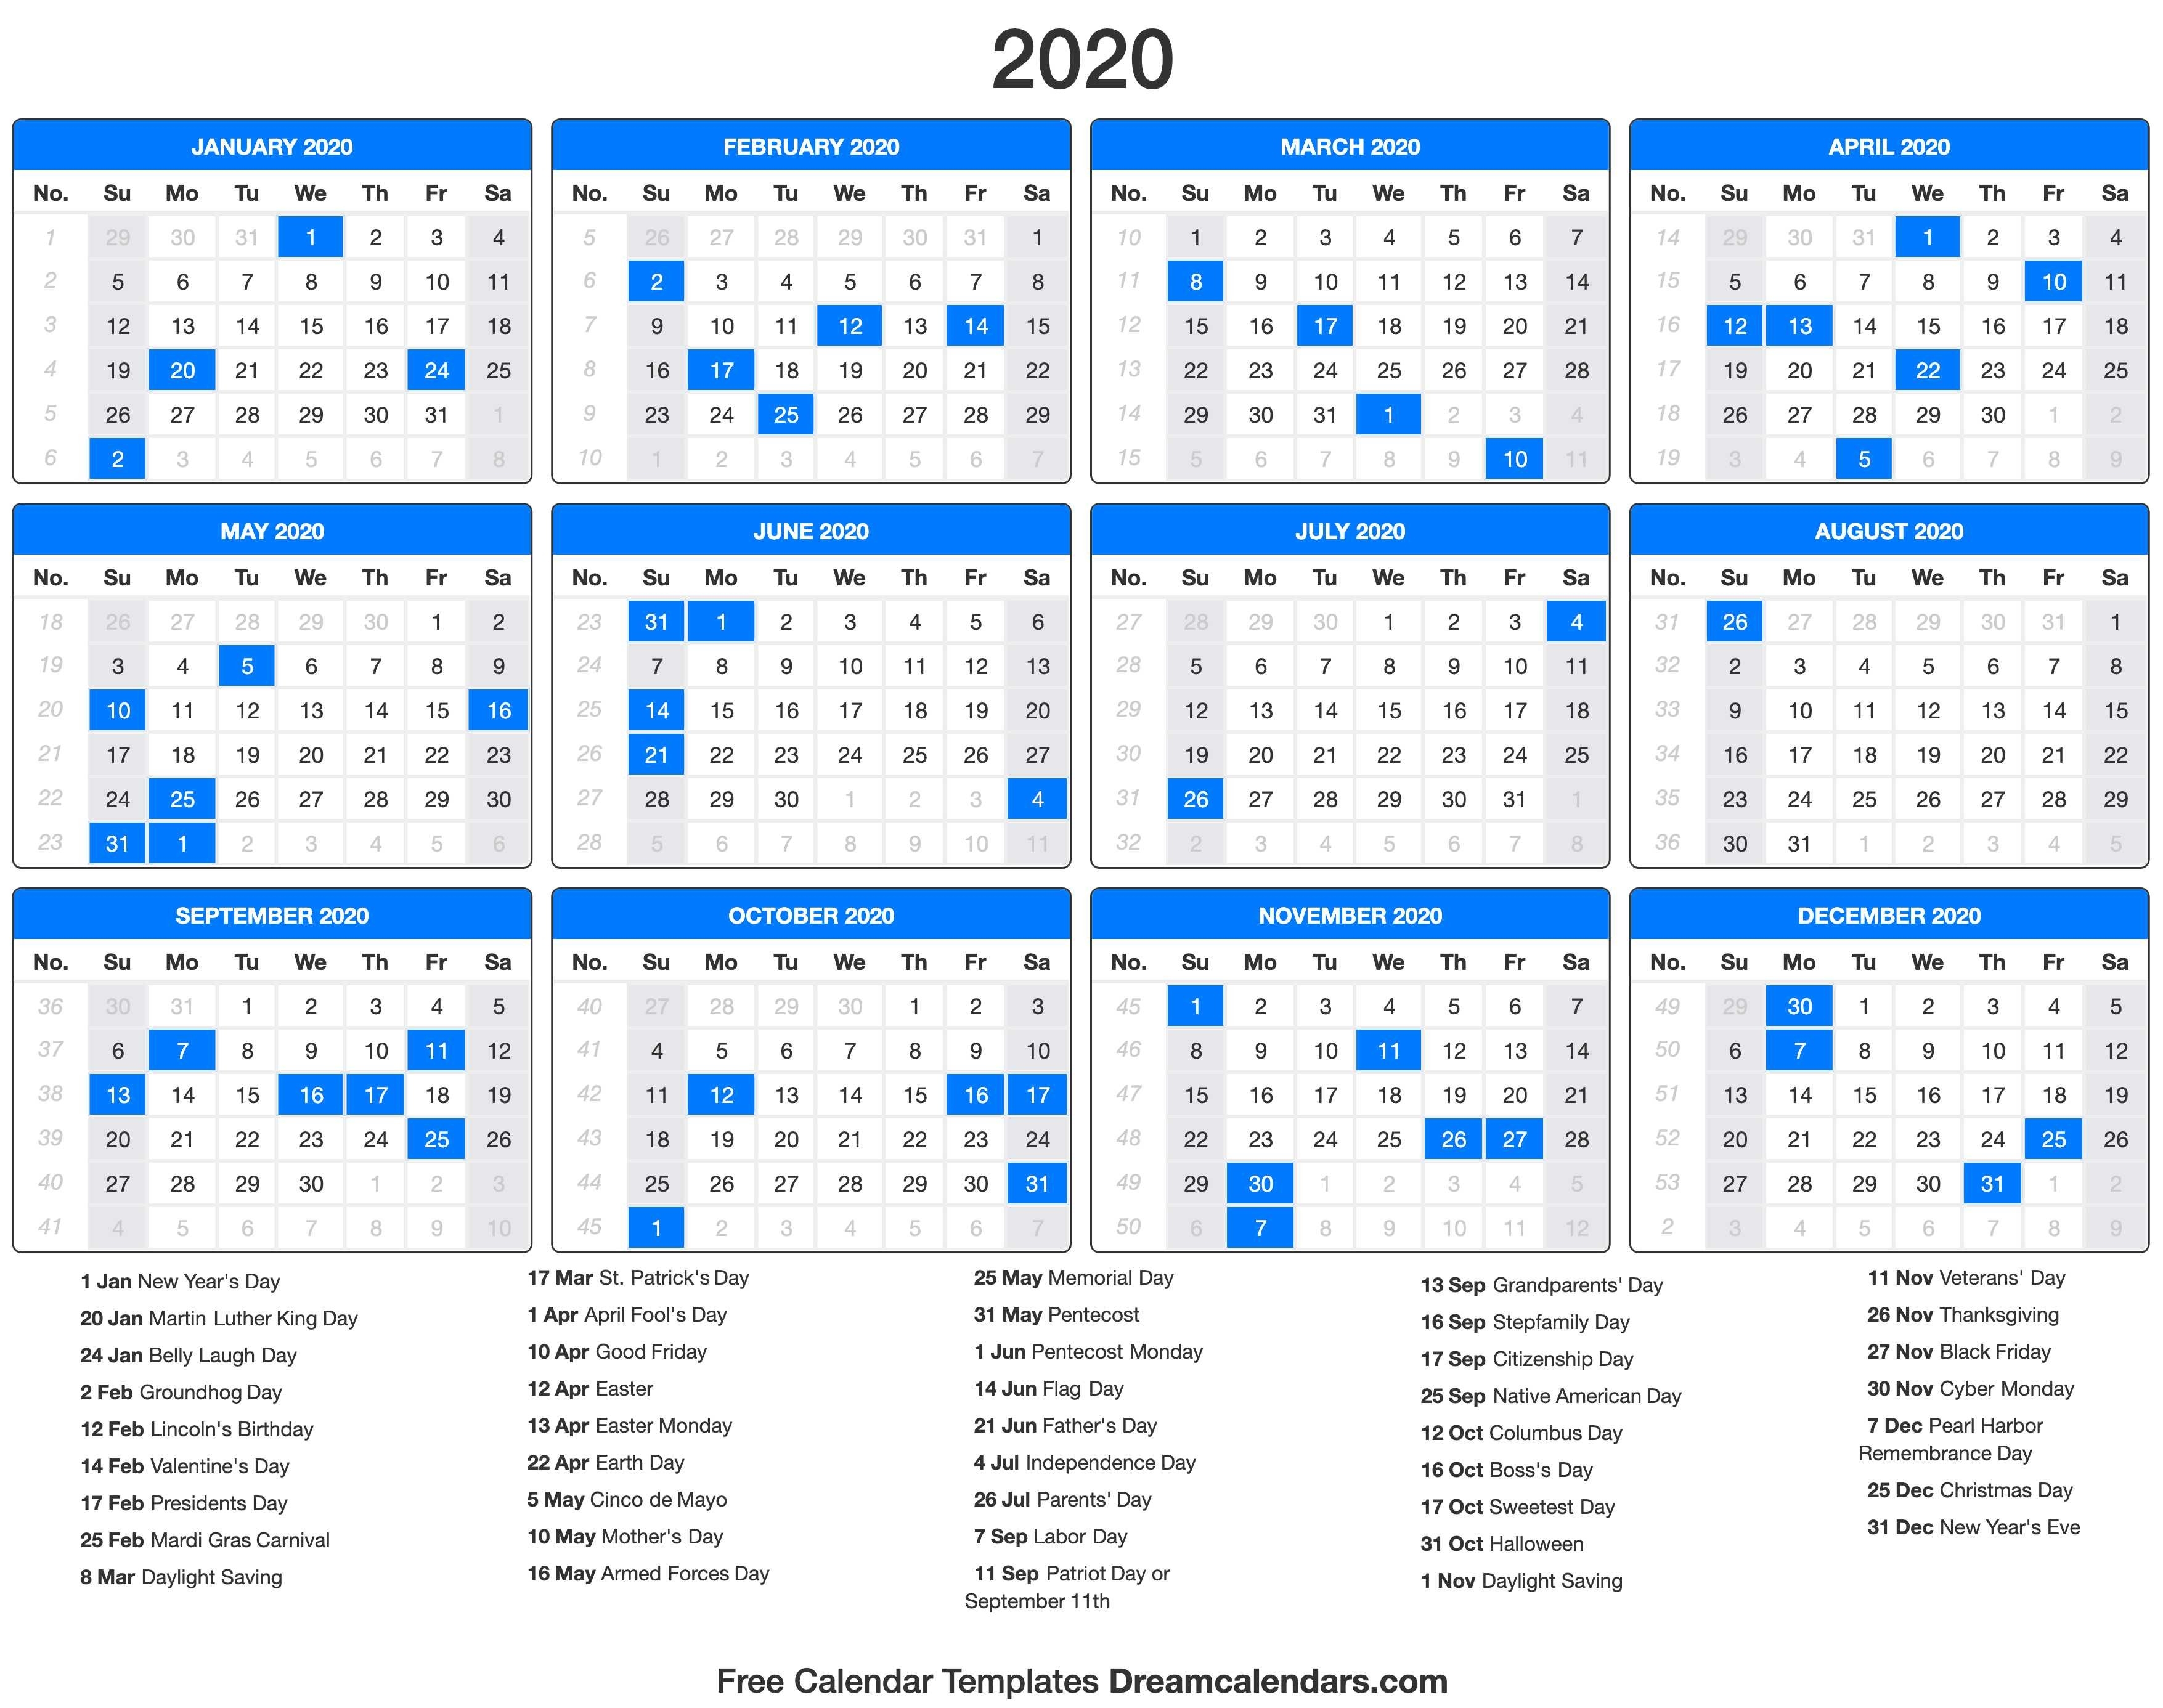 Dream Calendars - Make Your Calendar Template Blog-Printable List Of Jewish Holidays 2020